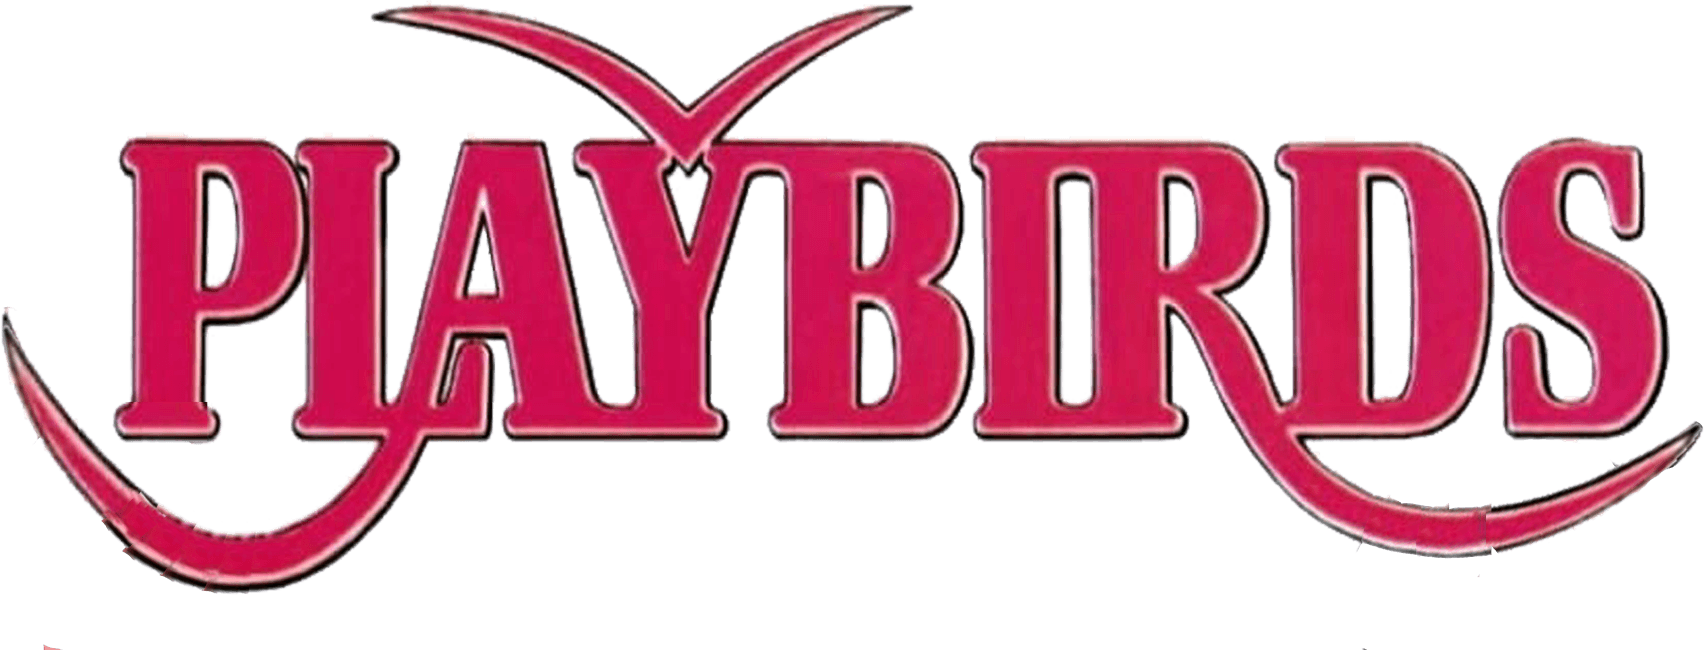 The Playbirds logo